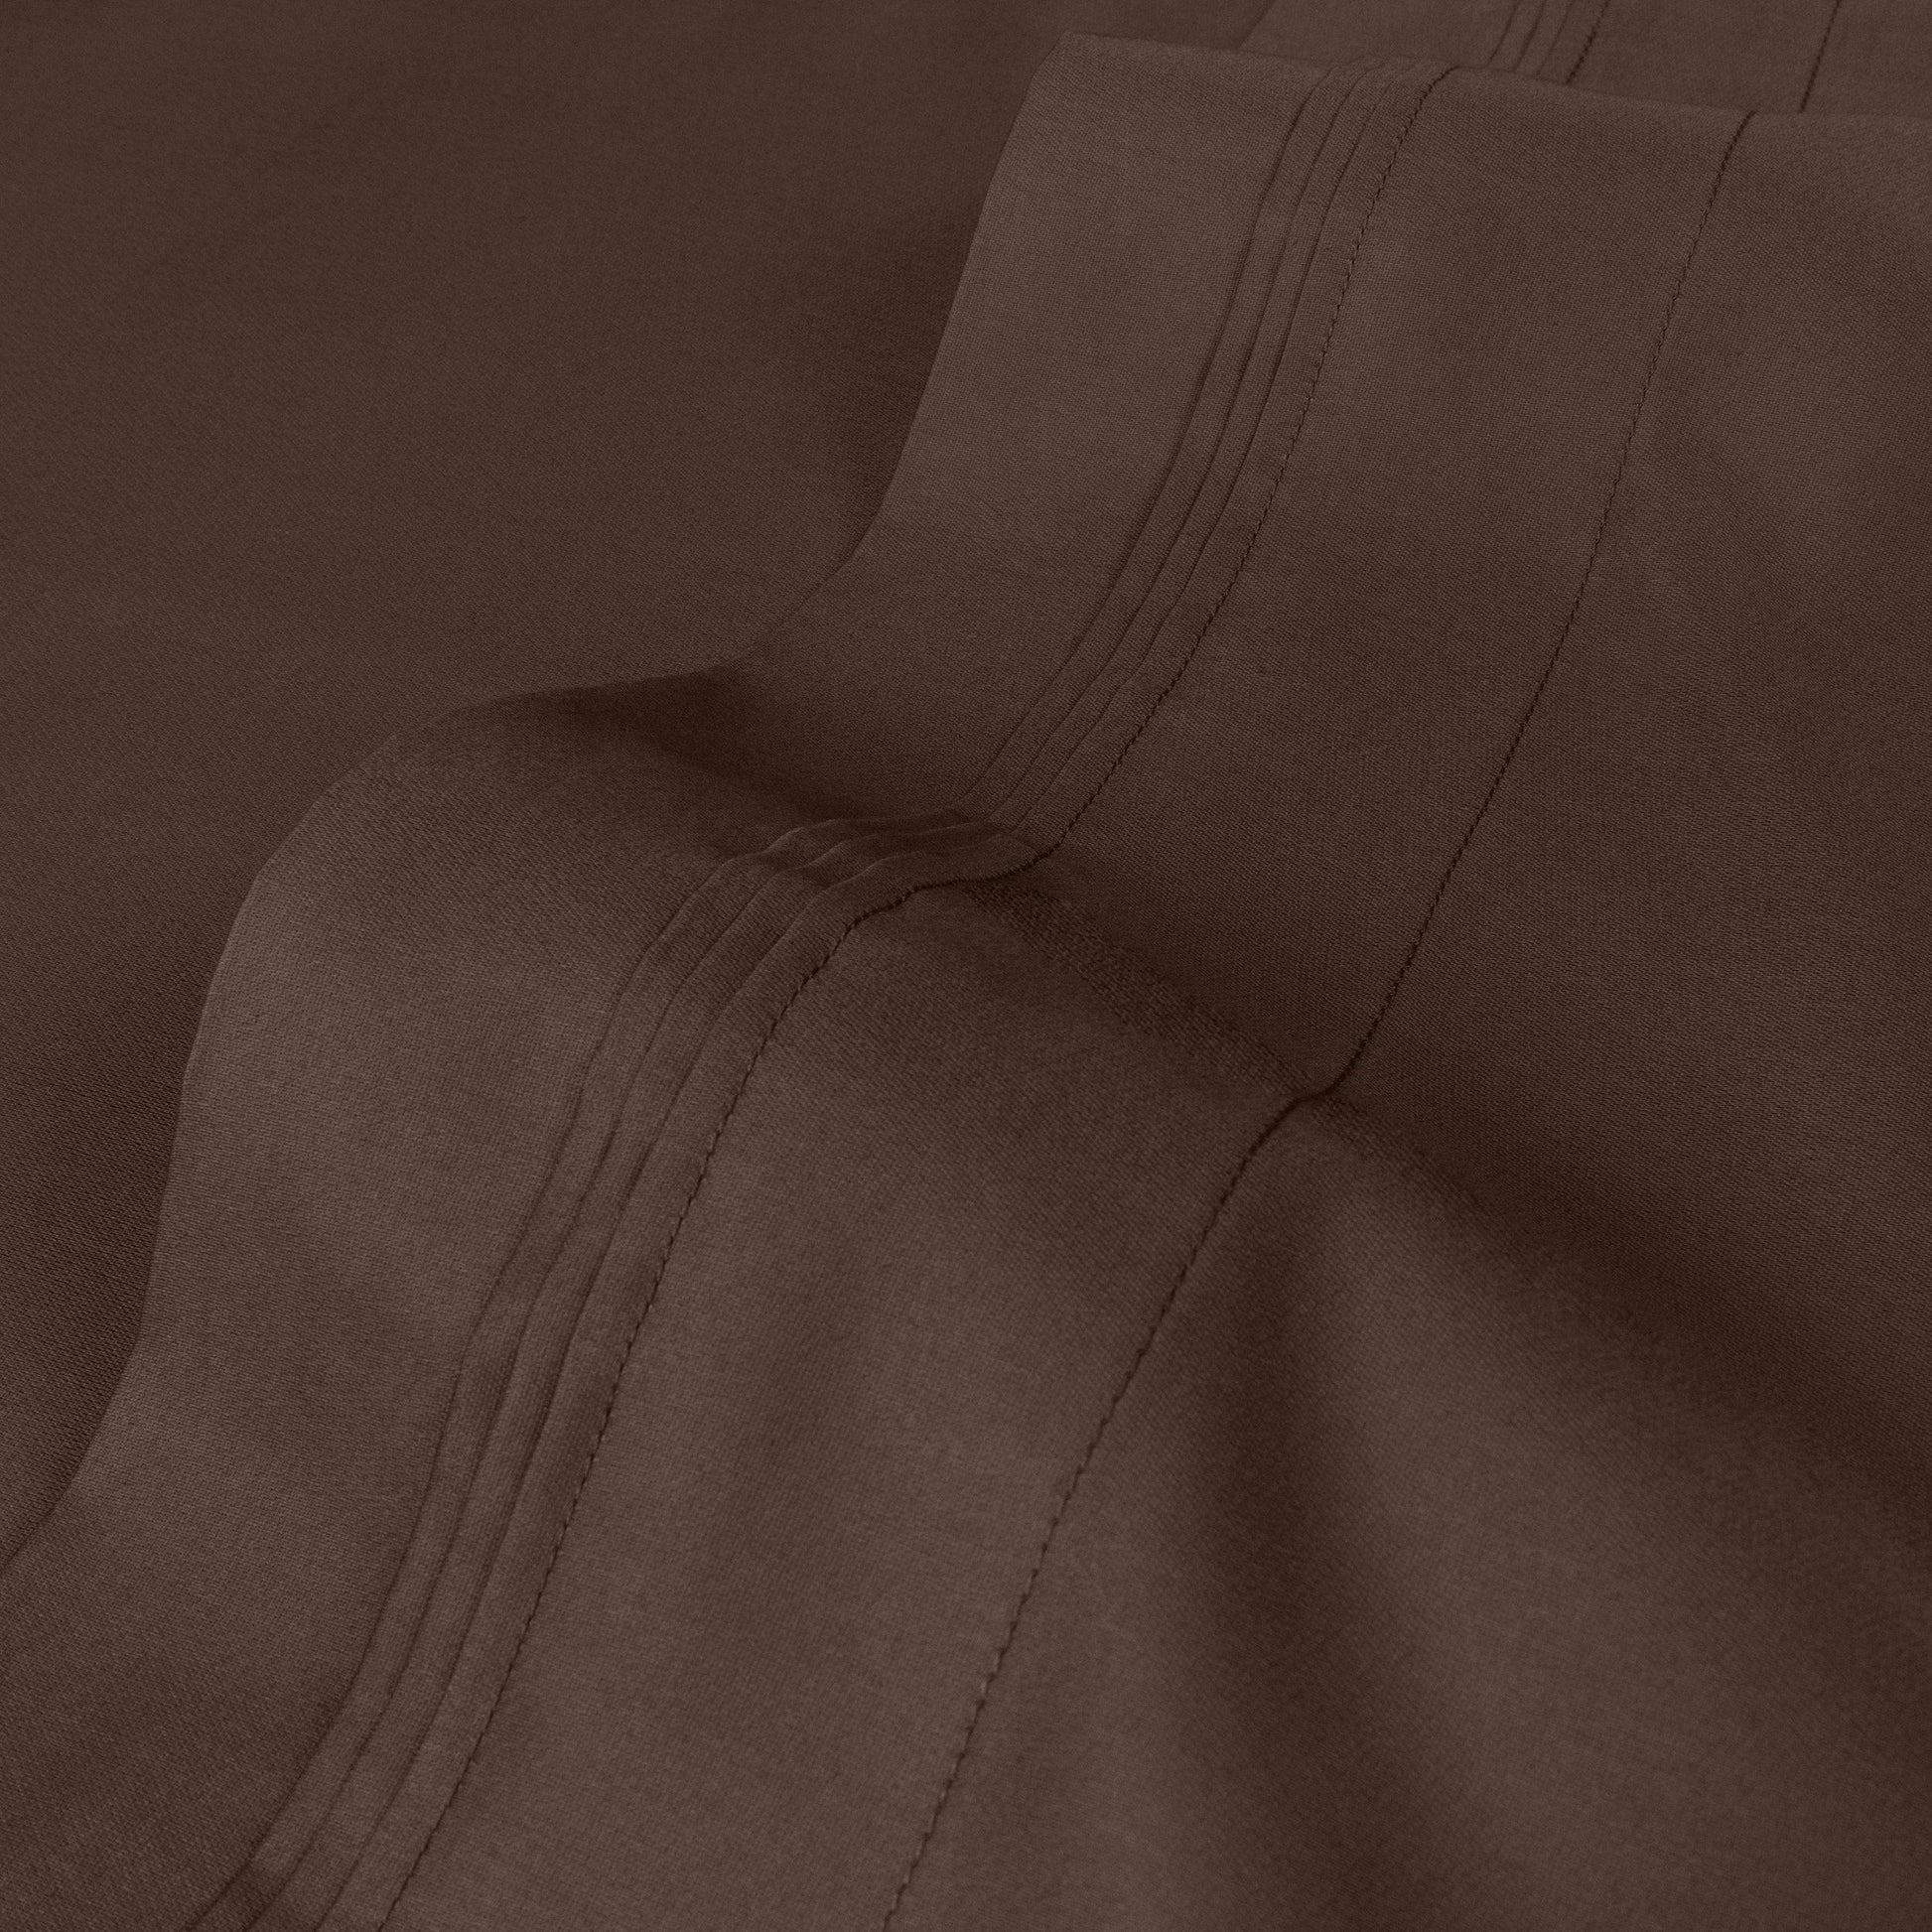 1500-Thread Count 100% Egyptian Cotton Plush Deep Pocket Sheet Set FredCo